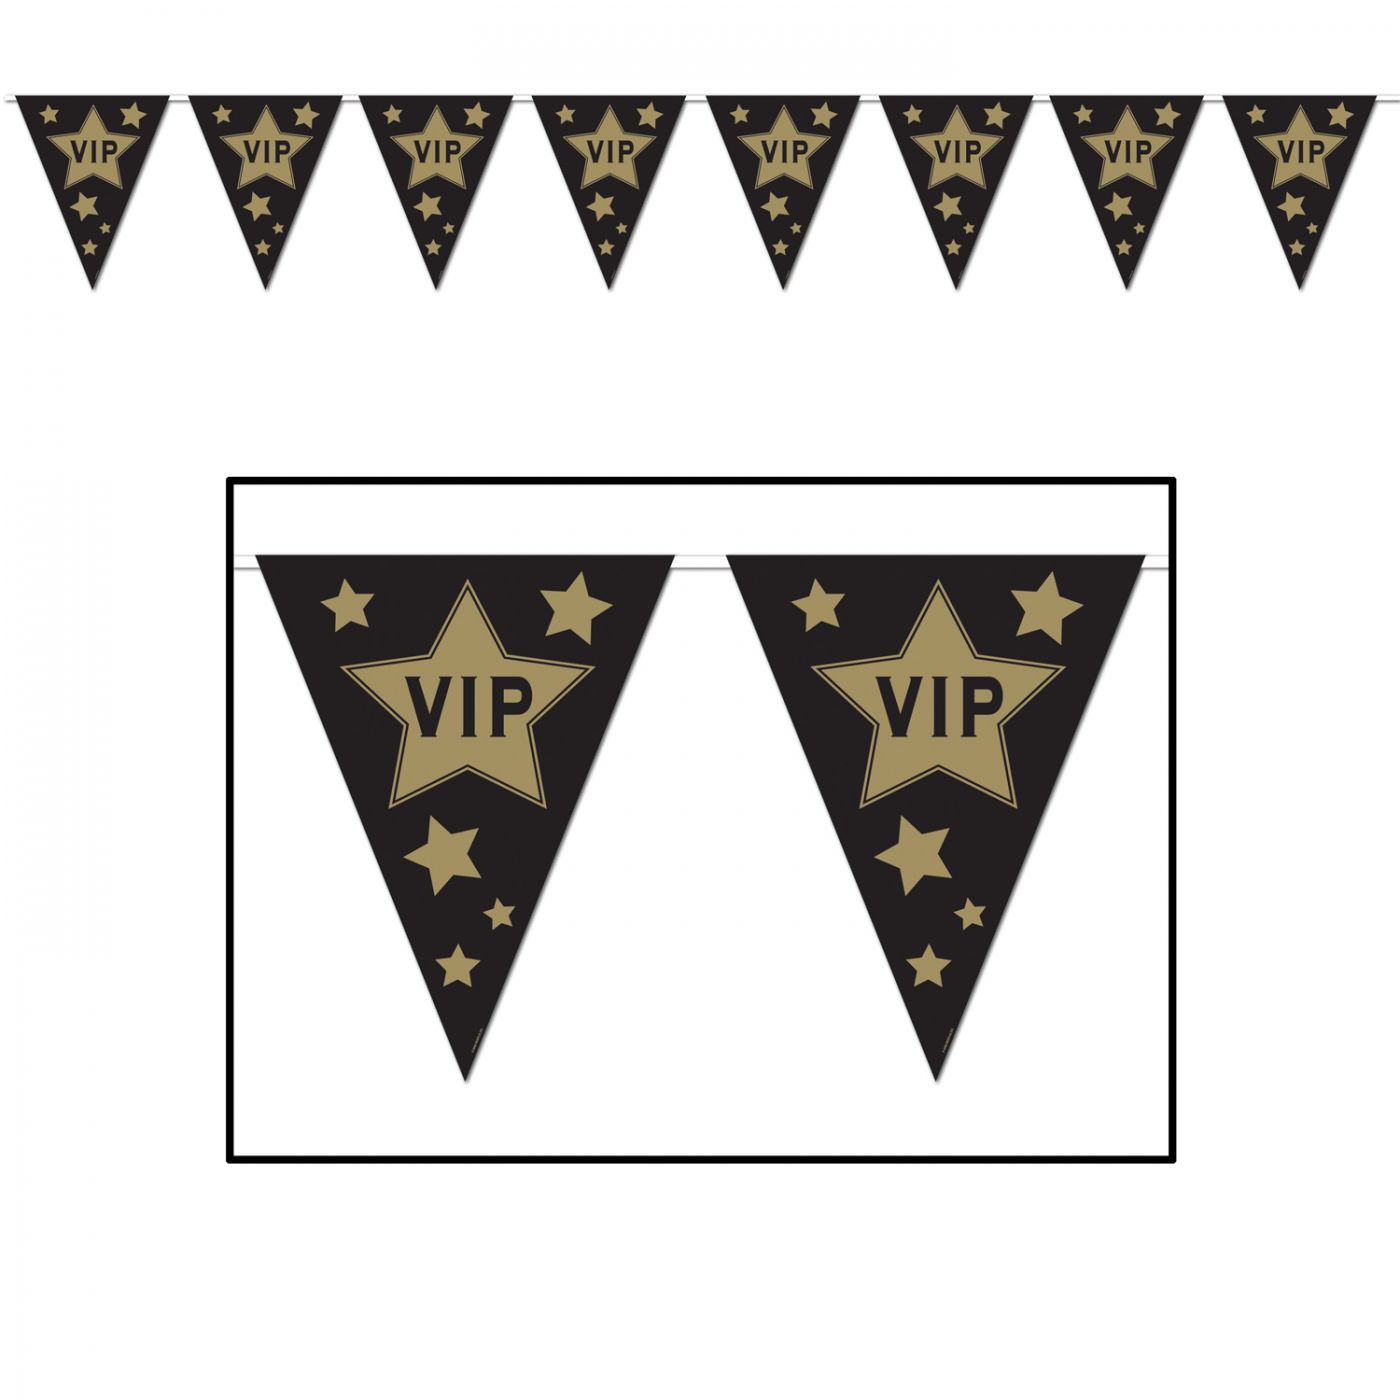 VIP Pennant Banner (12) image